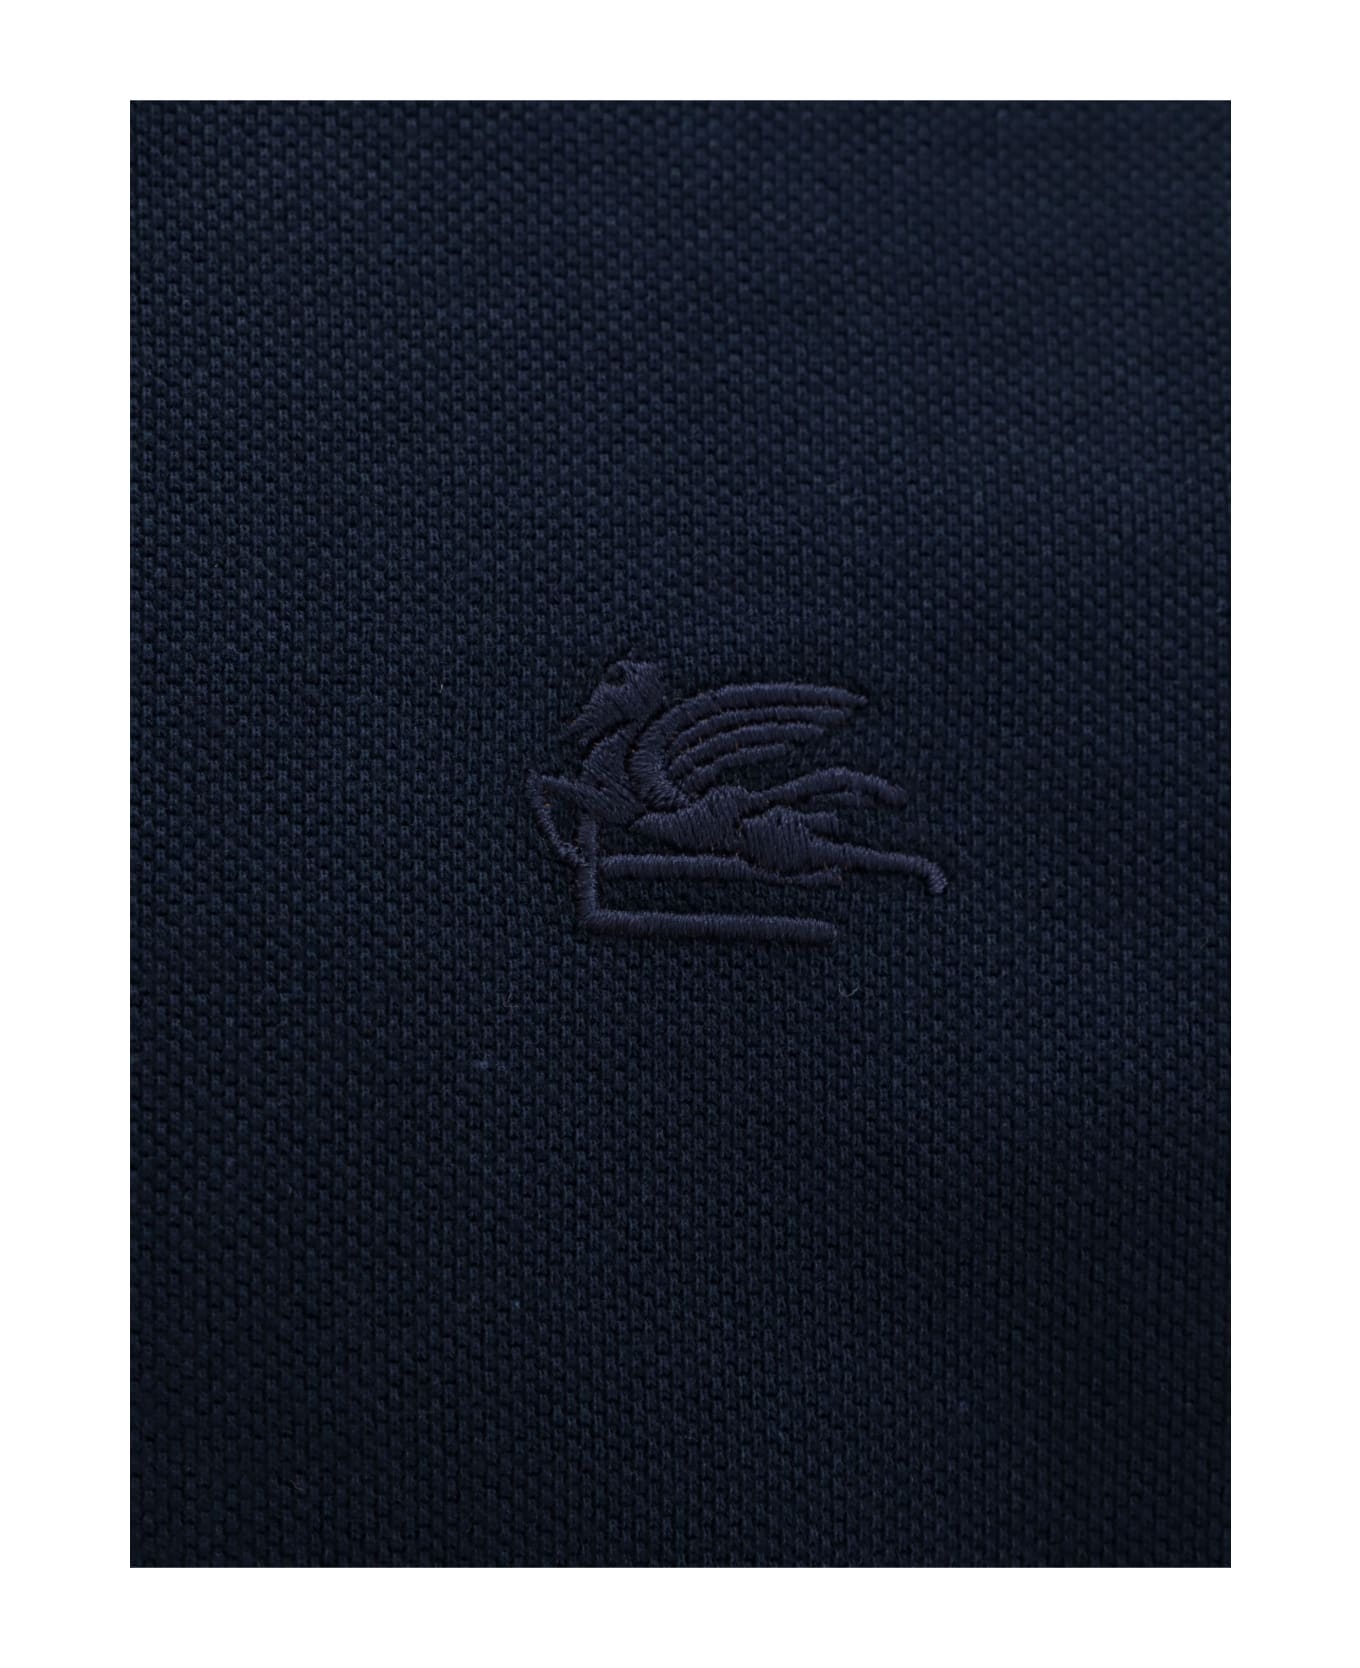 Etro Polo Shirt - Blu scurissimo 1